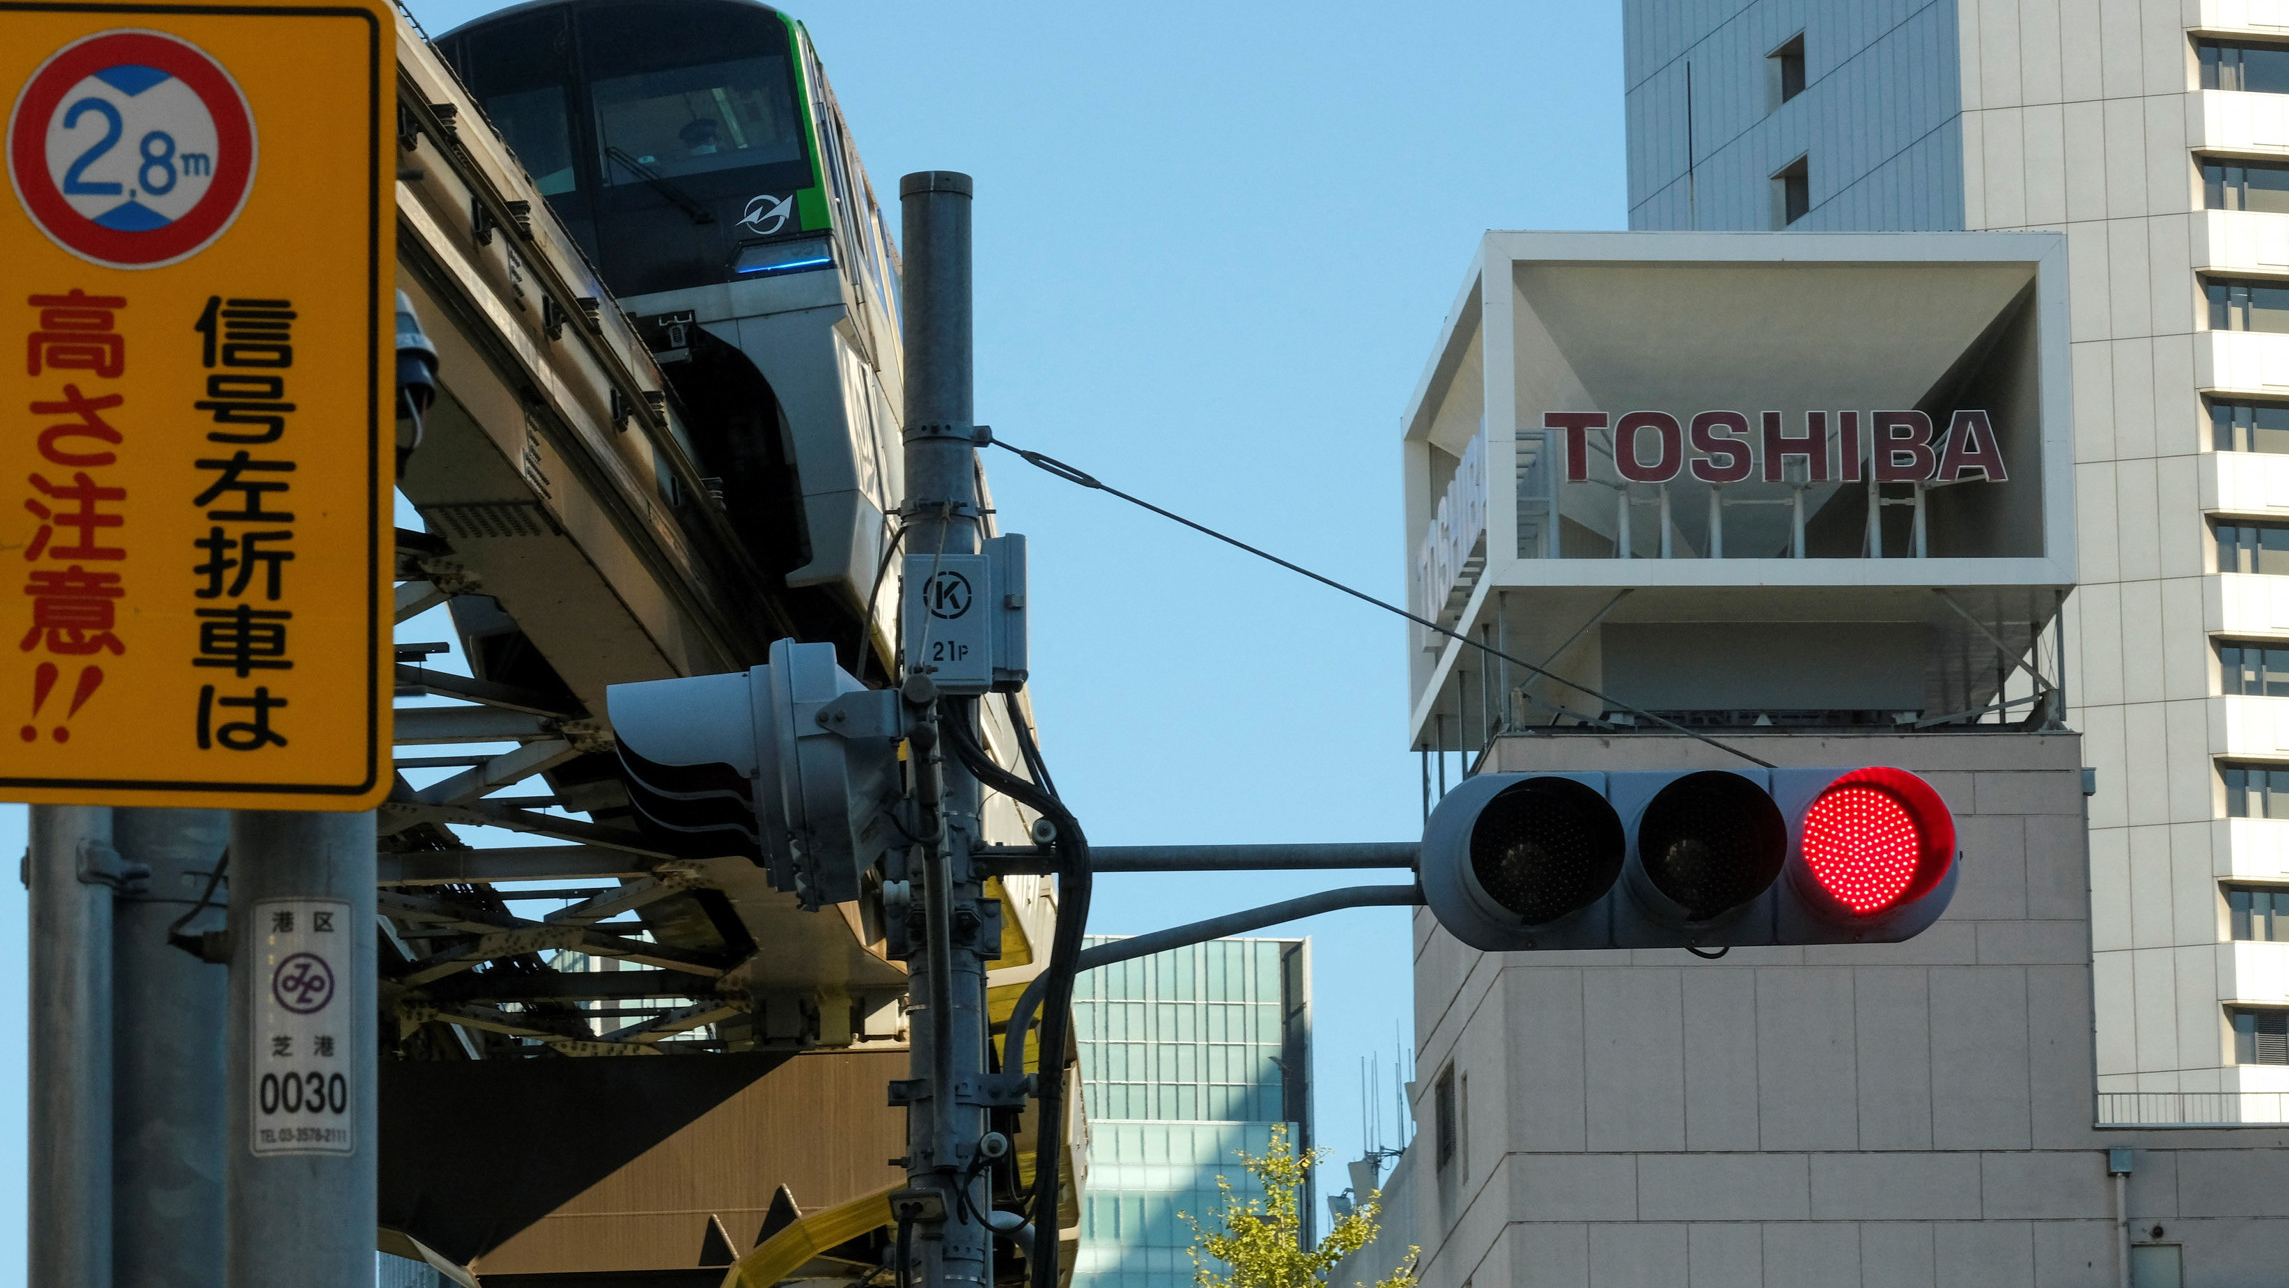 Bain and JIP consortiums emerge as frontrunners to buy Toshiba